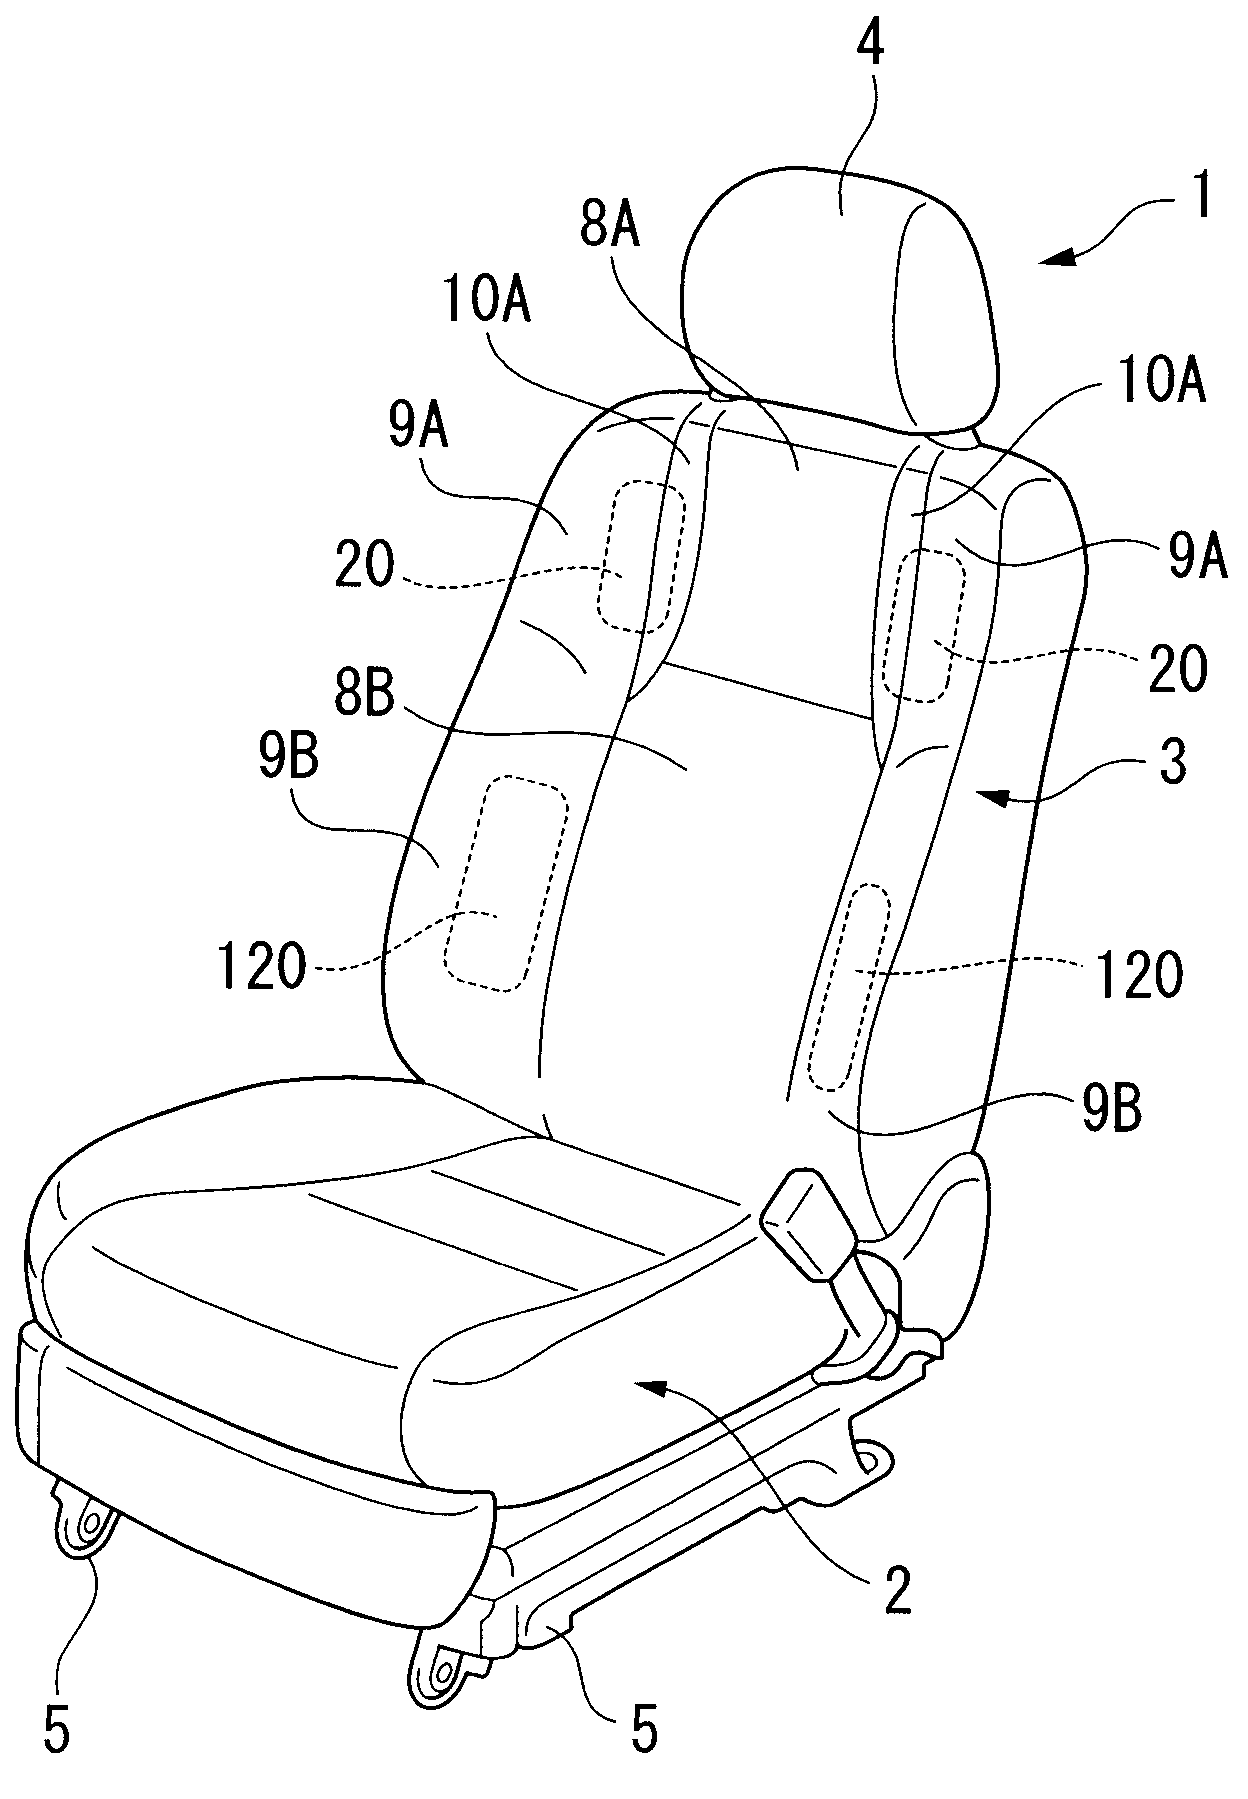 Seat of vehicle